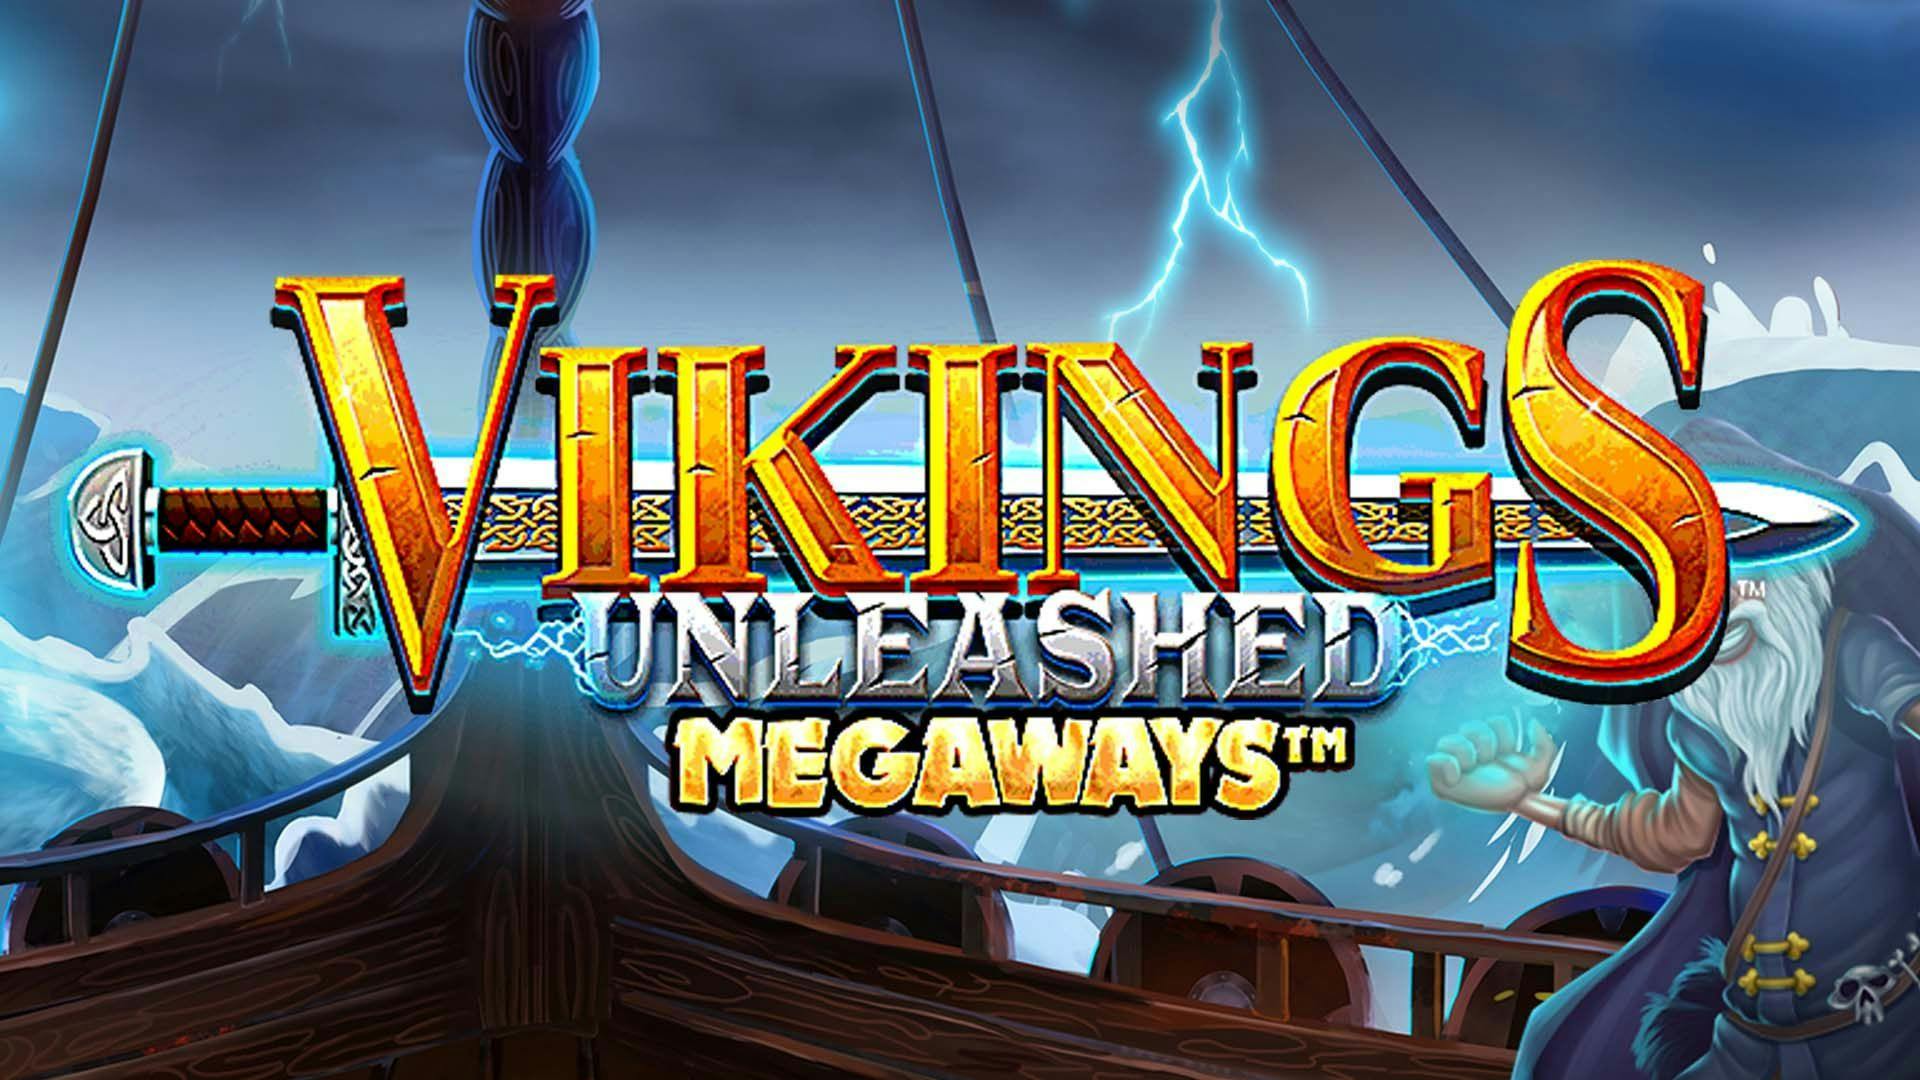 Online Slot Vikings Unleashed Megaways Free Demo